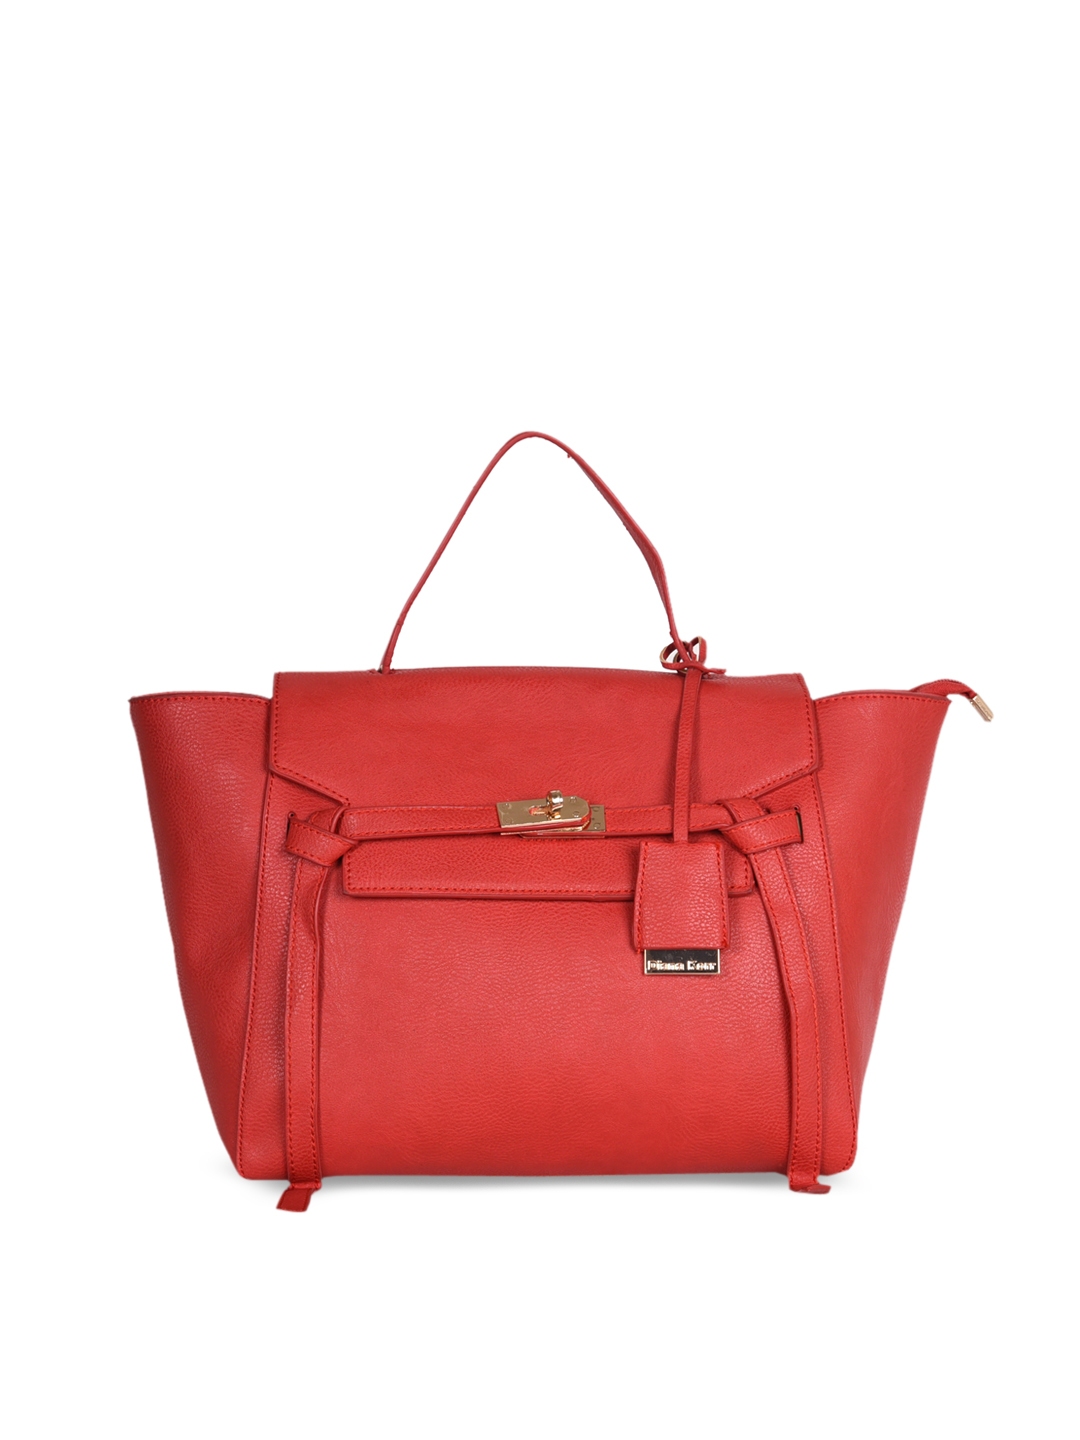 Buy Diana Korr Red Solid Handheld Bag - Handbags for Women 2410820 | Myntra